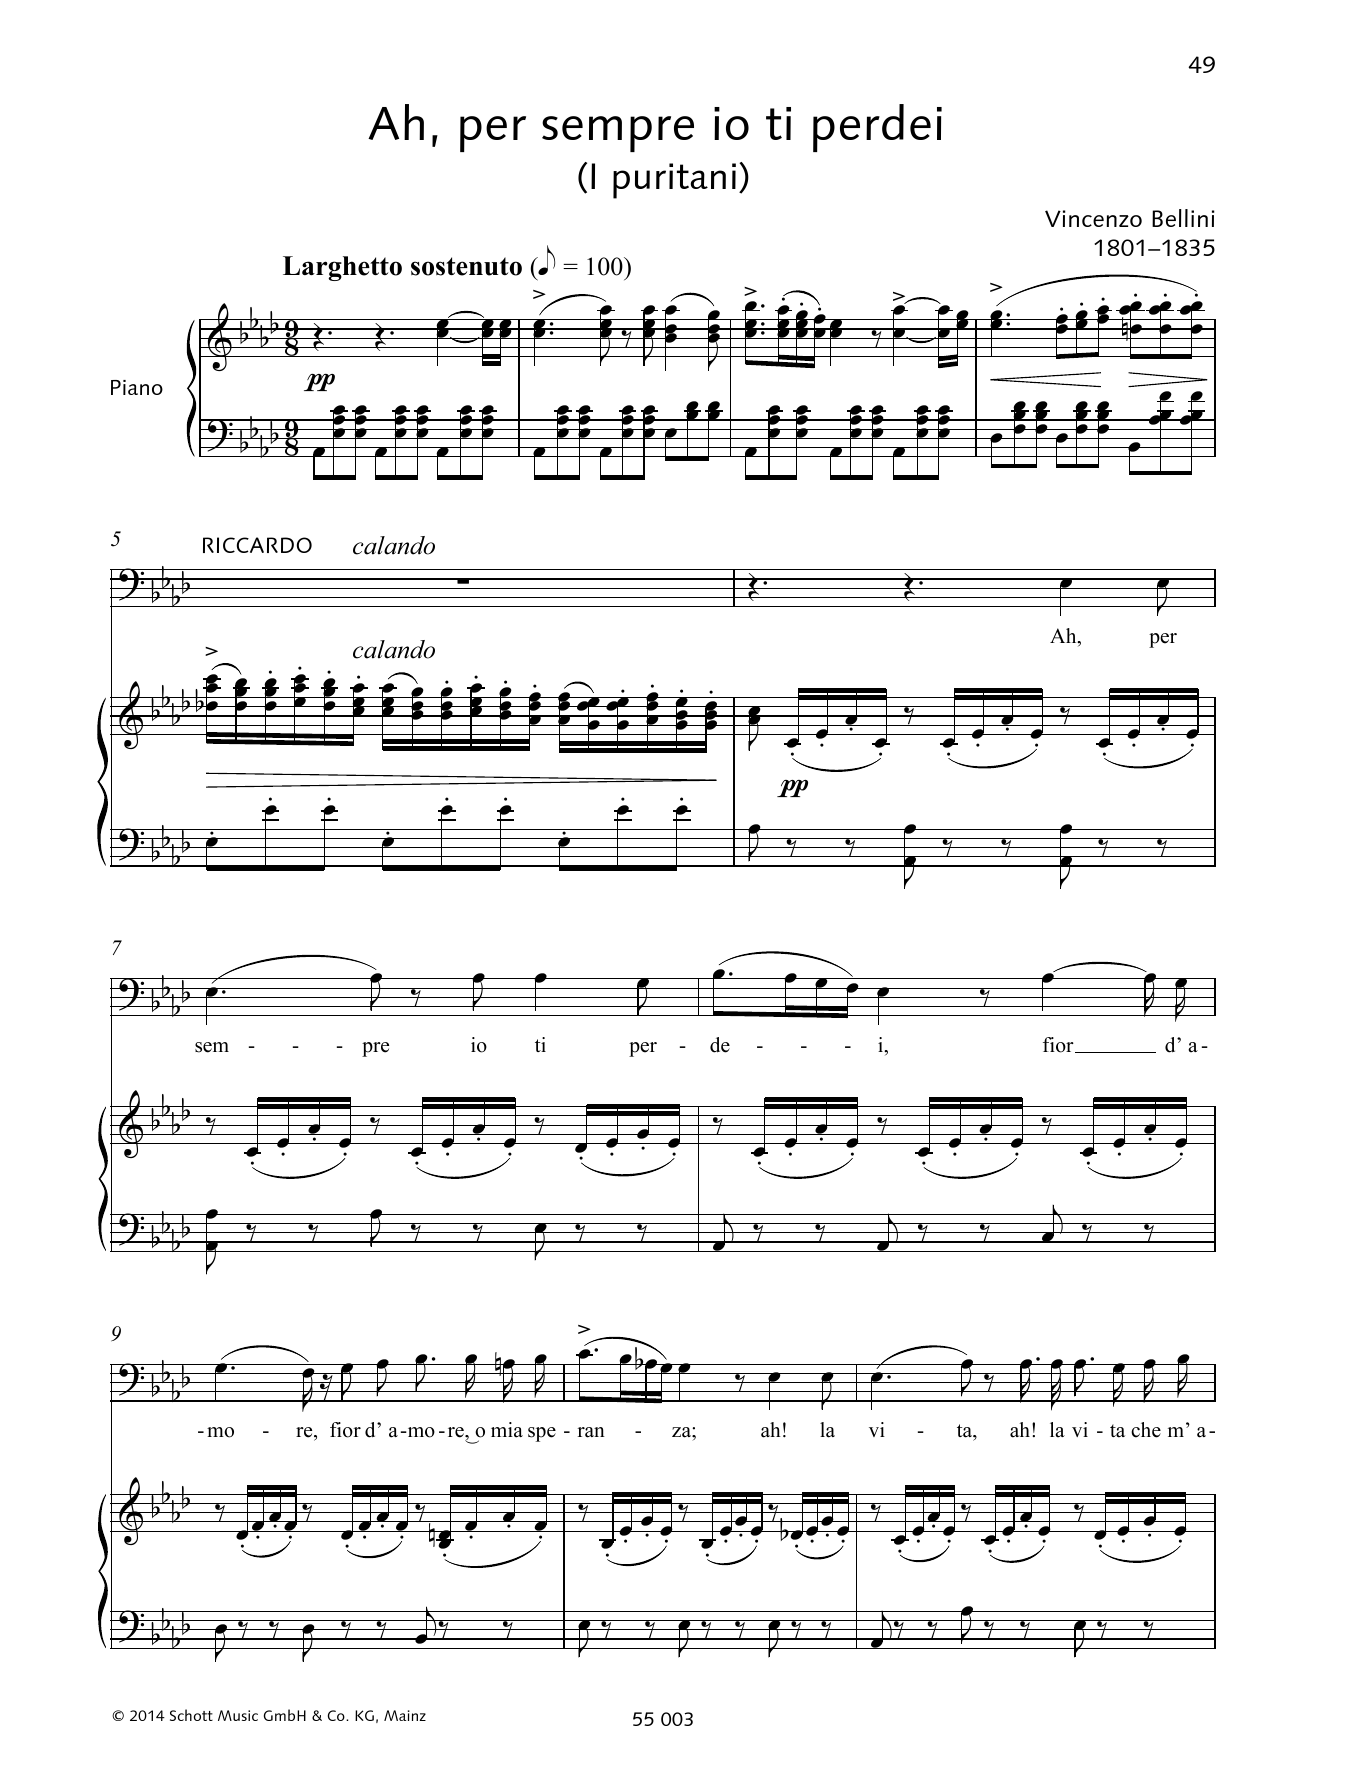 Francesca Licciarda Ah, per sempre io ti perdei Sheet Music Notes & Chords for Piano & Vocal - Download or Print PDF